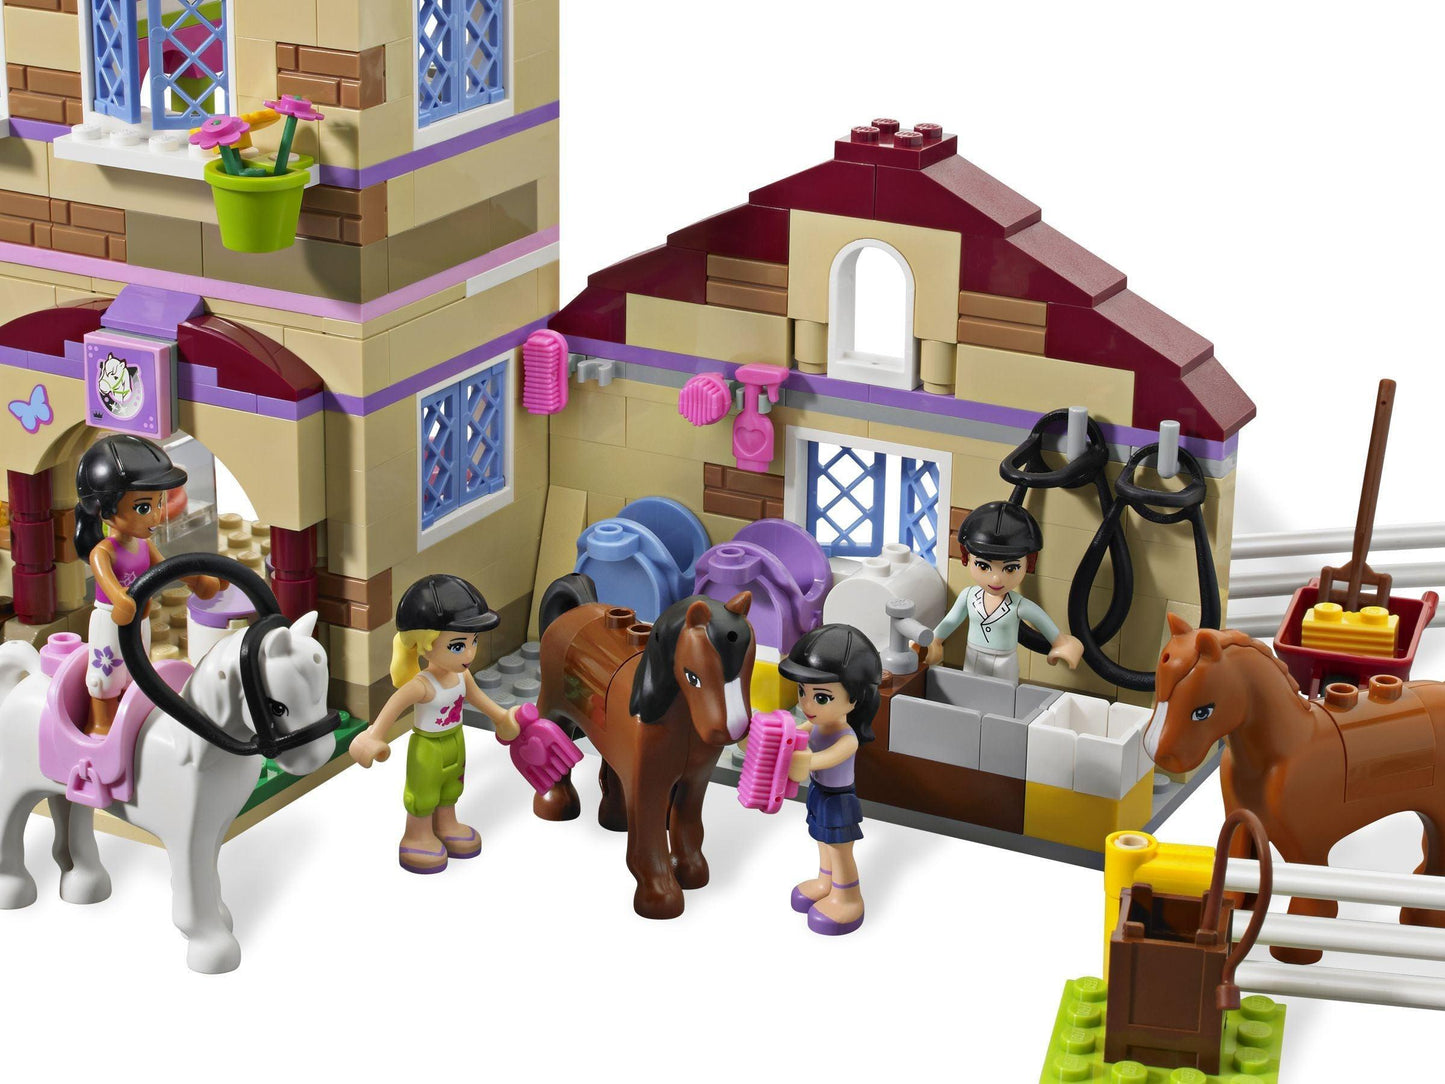 LEGO Zomer paardrijkamp 3185 Friends | 2TTOYS ✓ Official shop<br>